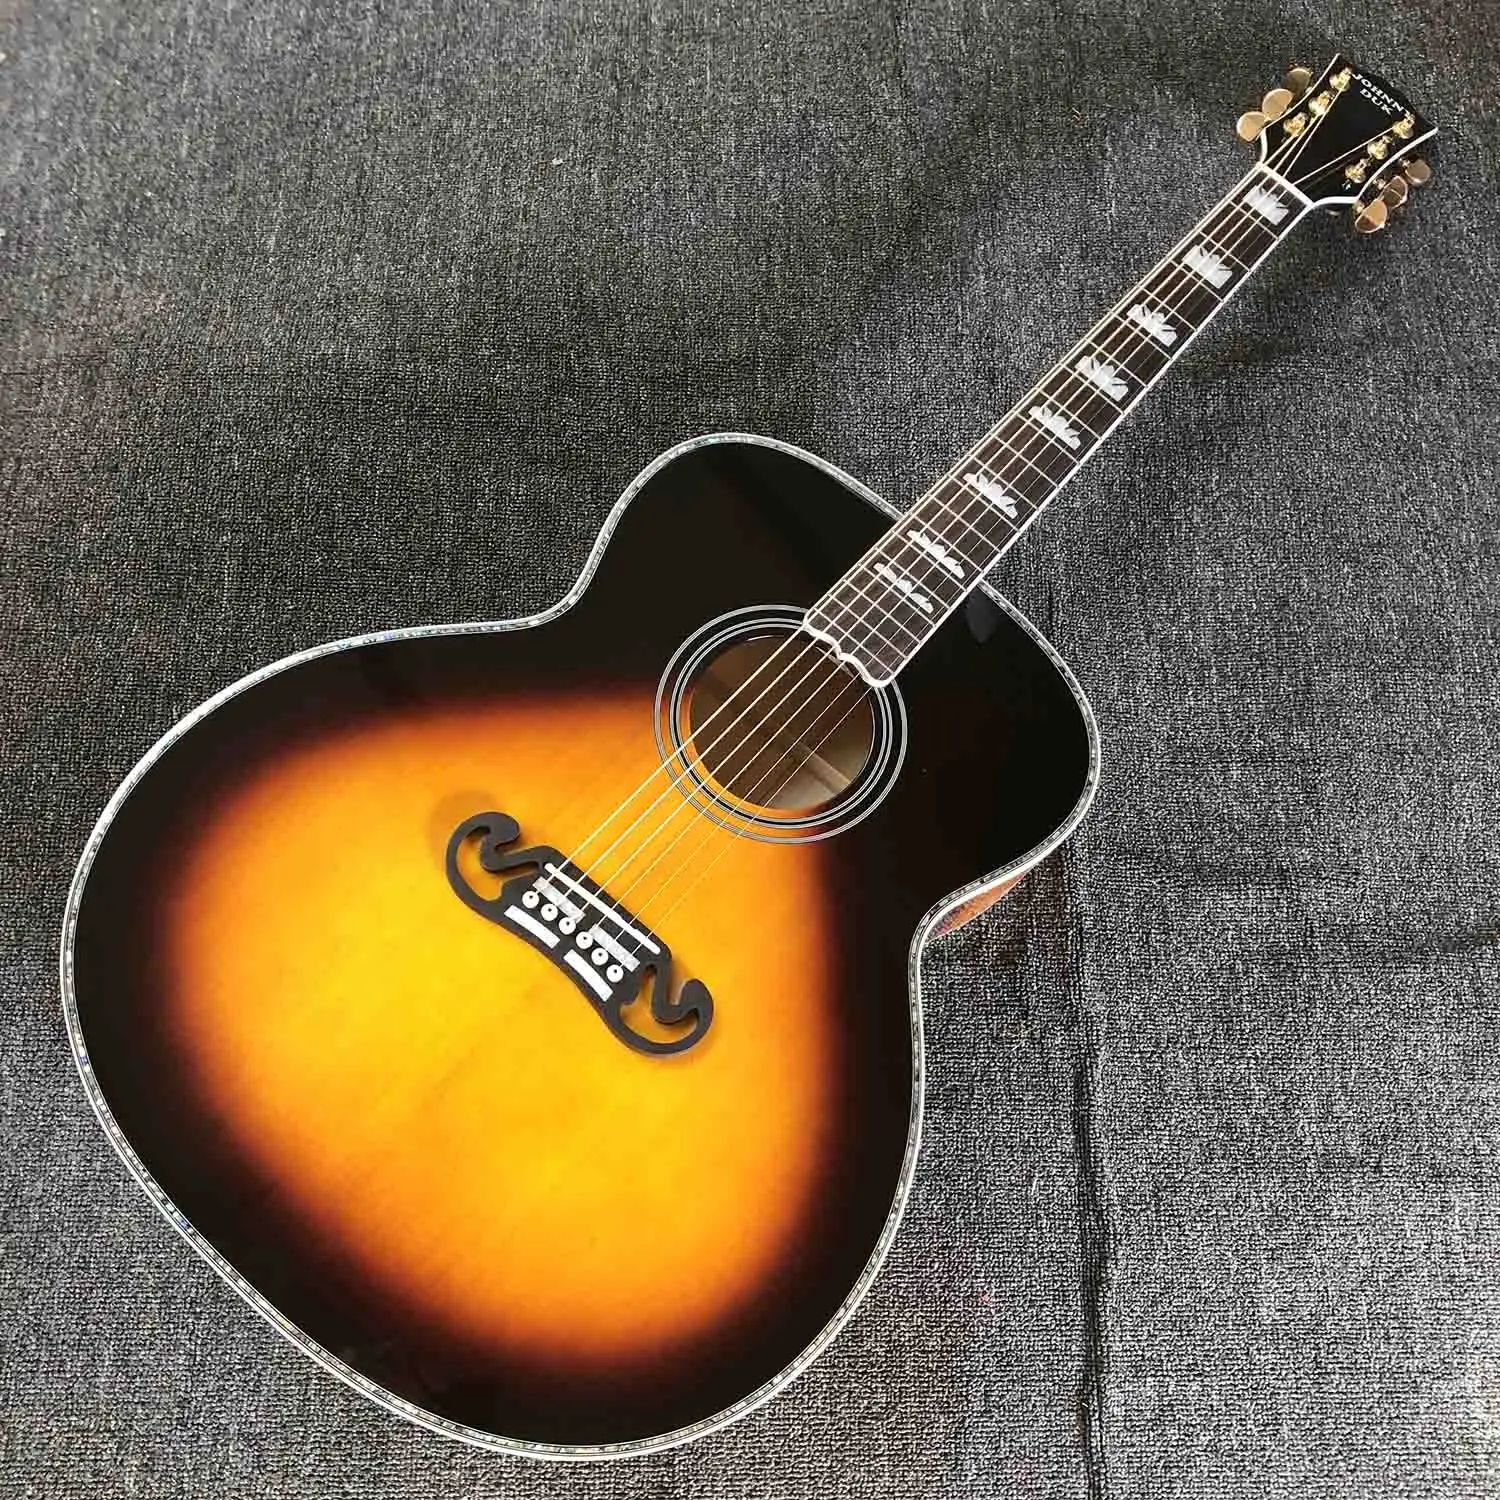 43 " Sunburst Flame Maple J200 Acoustic Guitar Rosewood Fingerboard Solid  Spruce Jumbo Body J200vs Electric Guitar - Guitar - AliExpress